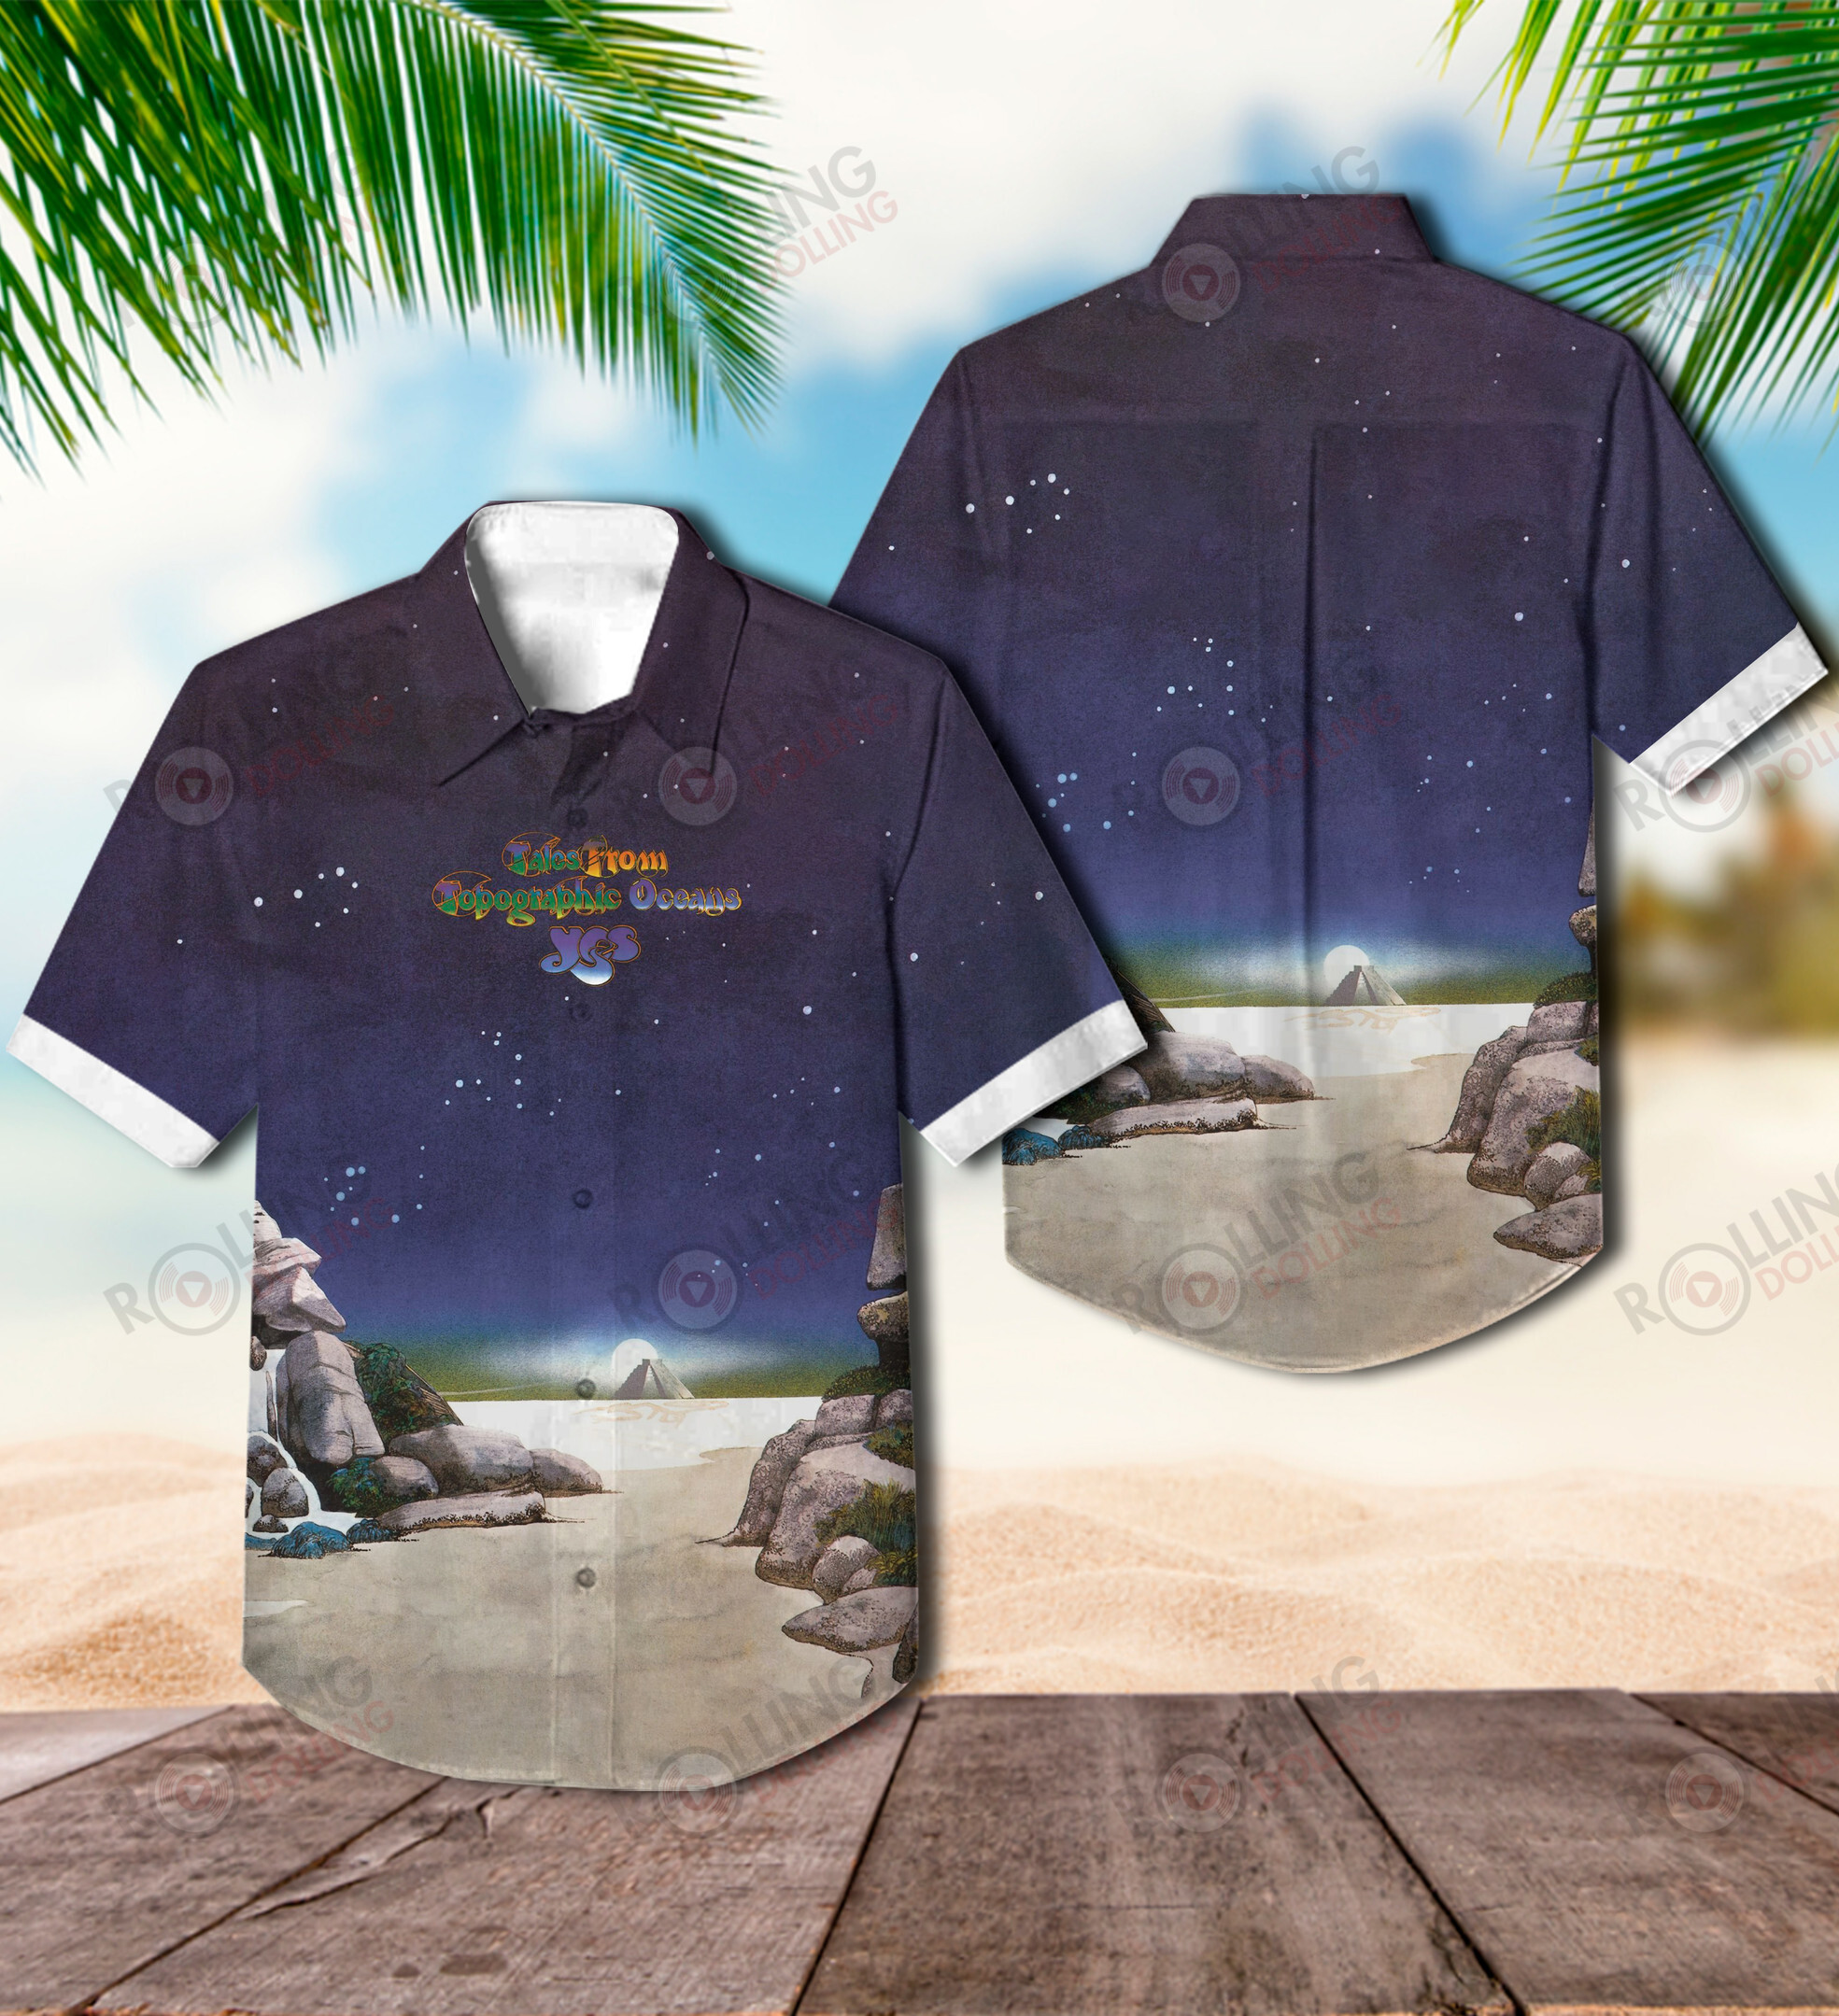 Regardless of their style, you will feel comfortable wearing Hawaiian Shirt 77